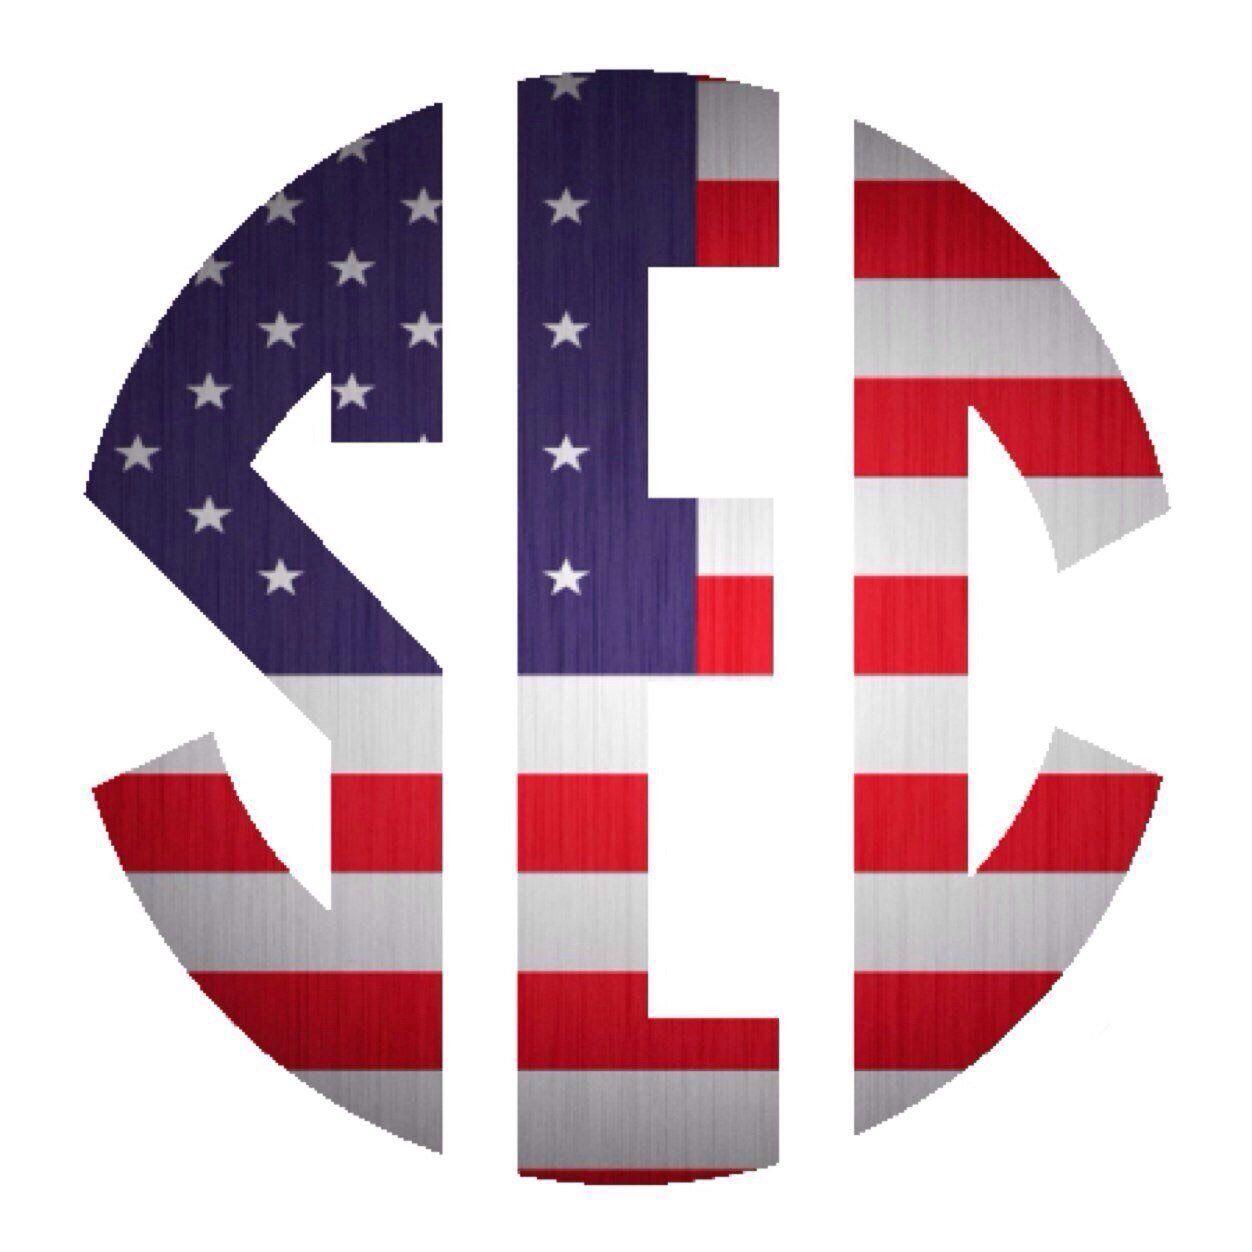 SEC Logo - The SEC Logo (@SEC_Iogo) | Twitter